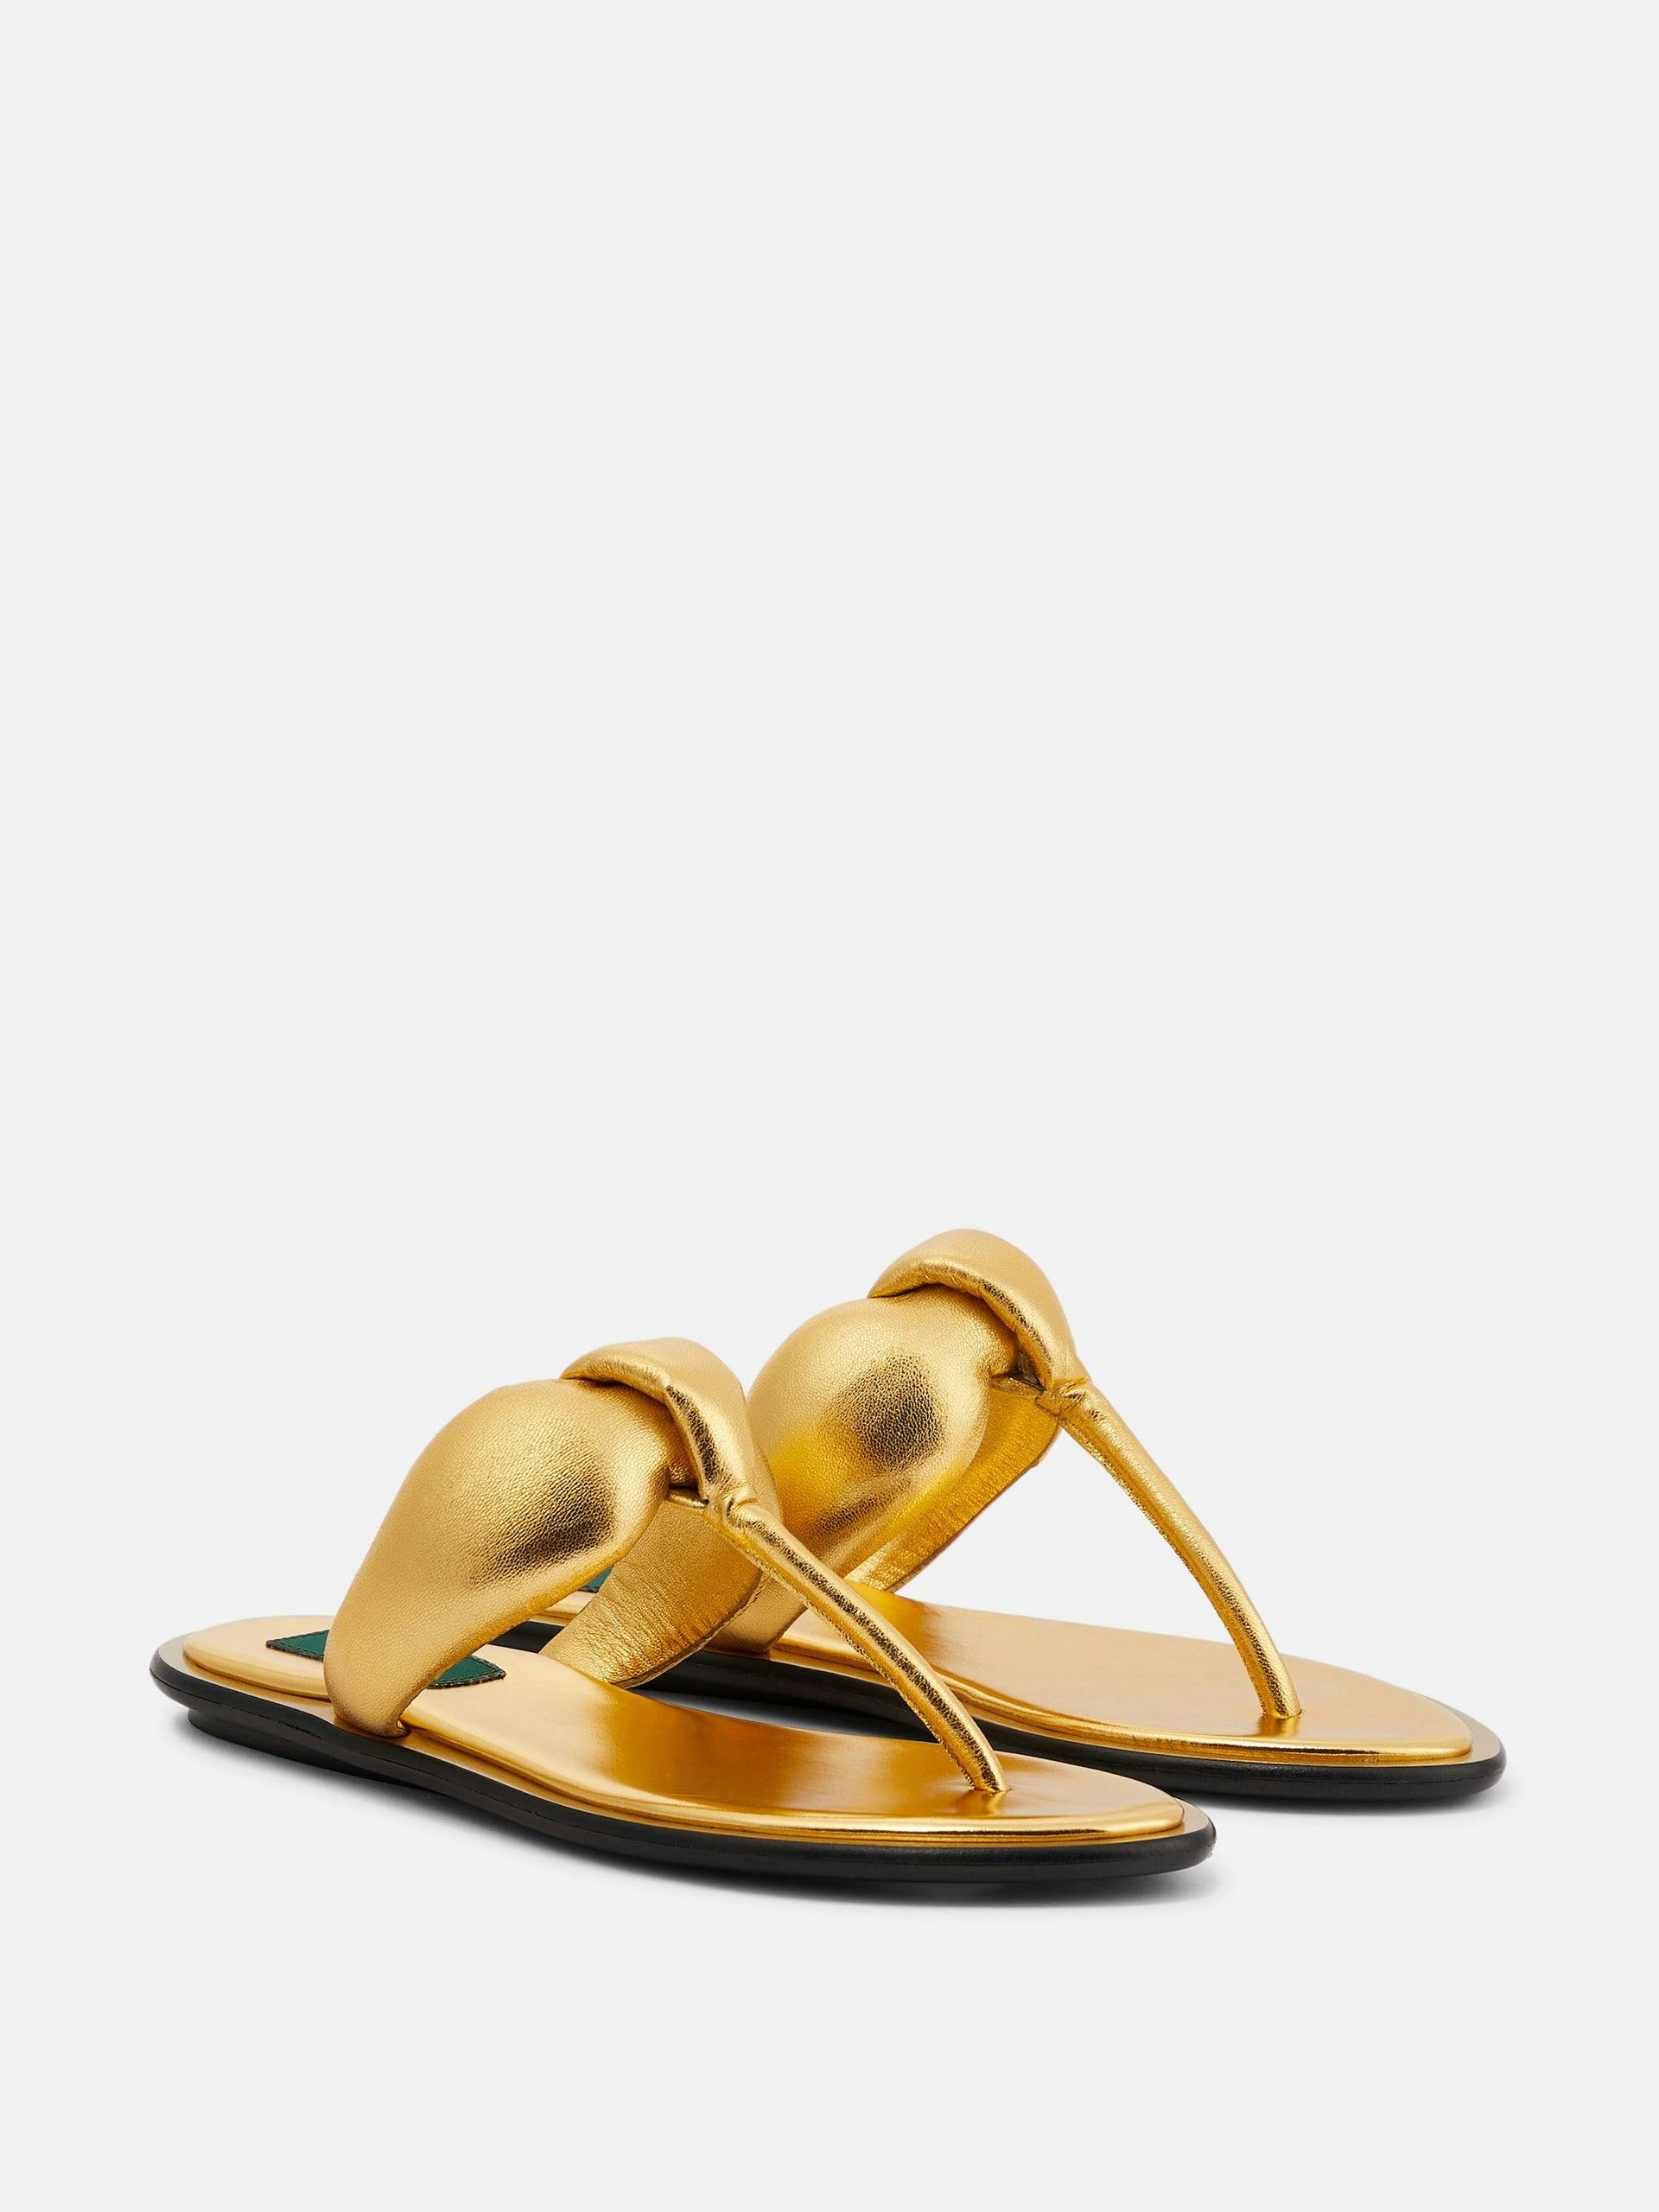 Metallic leather thong sandals